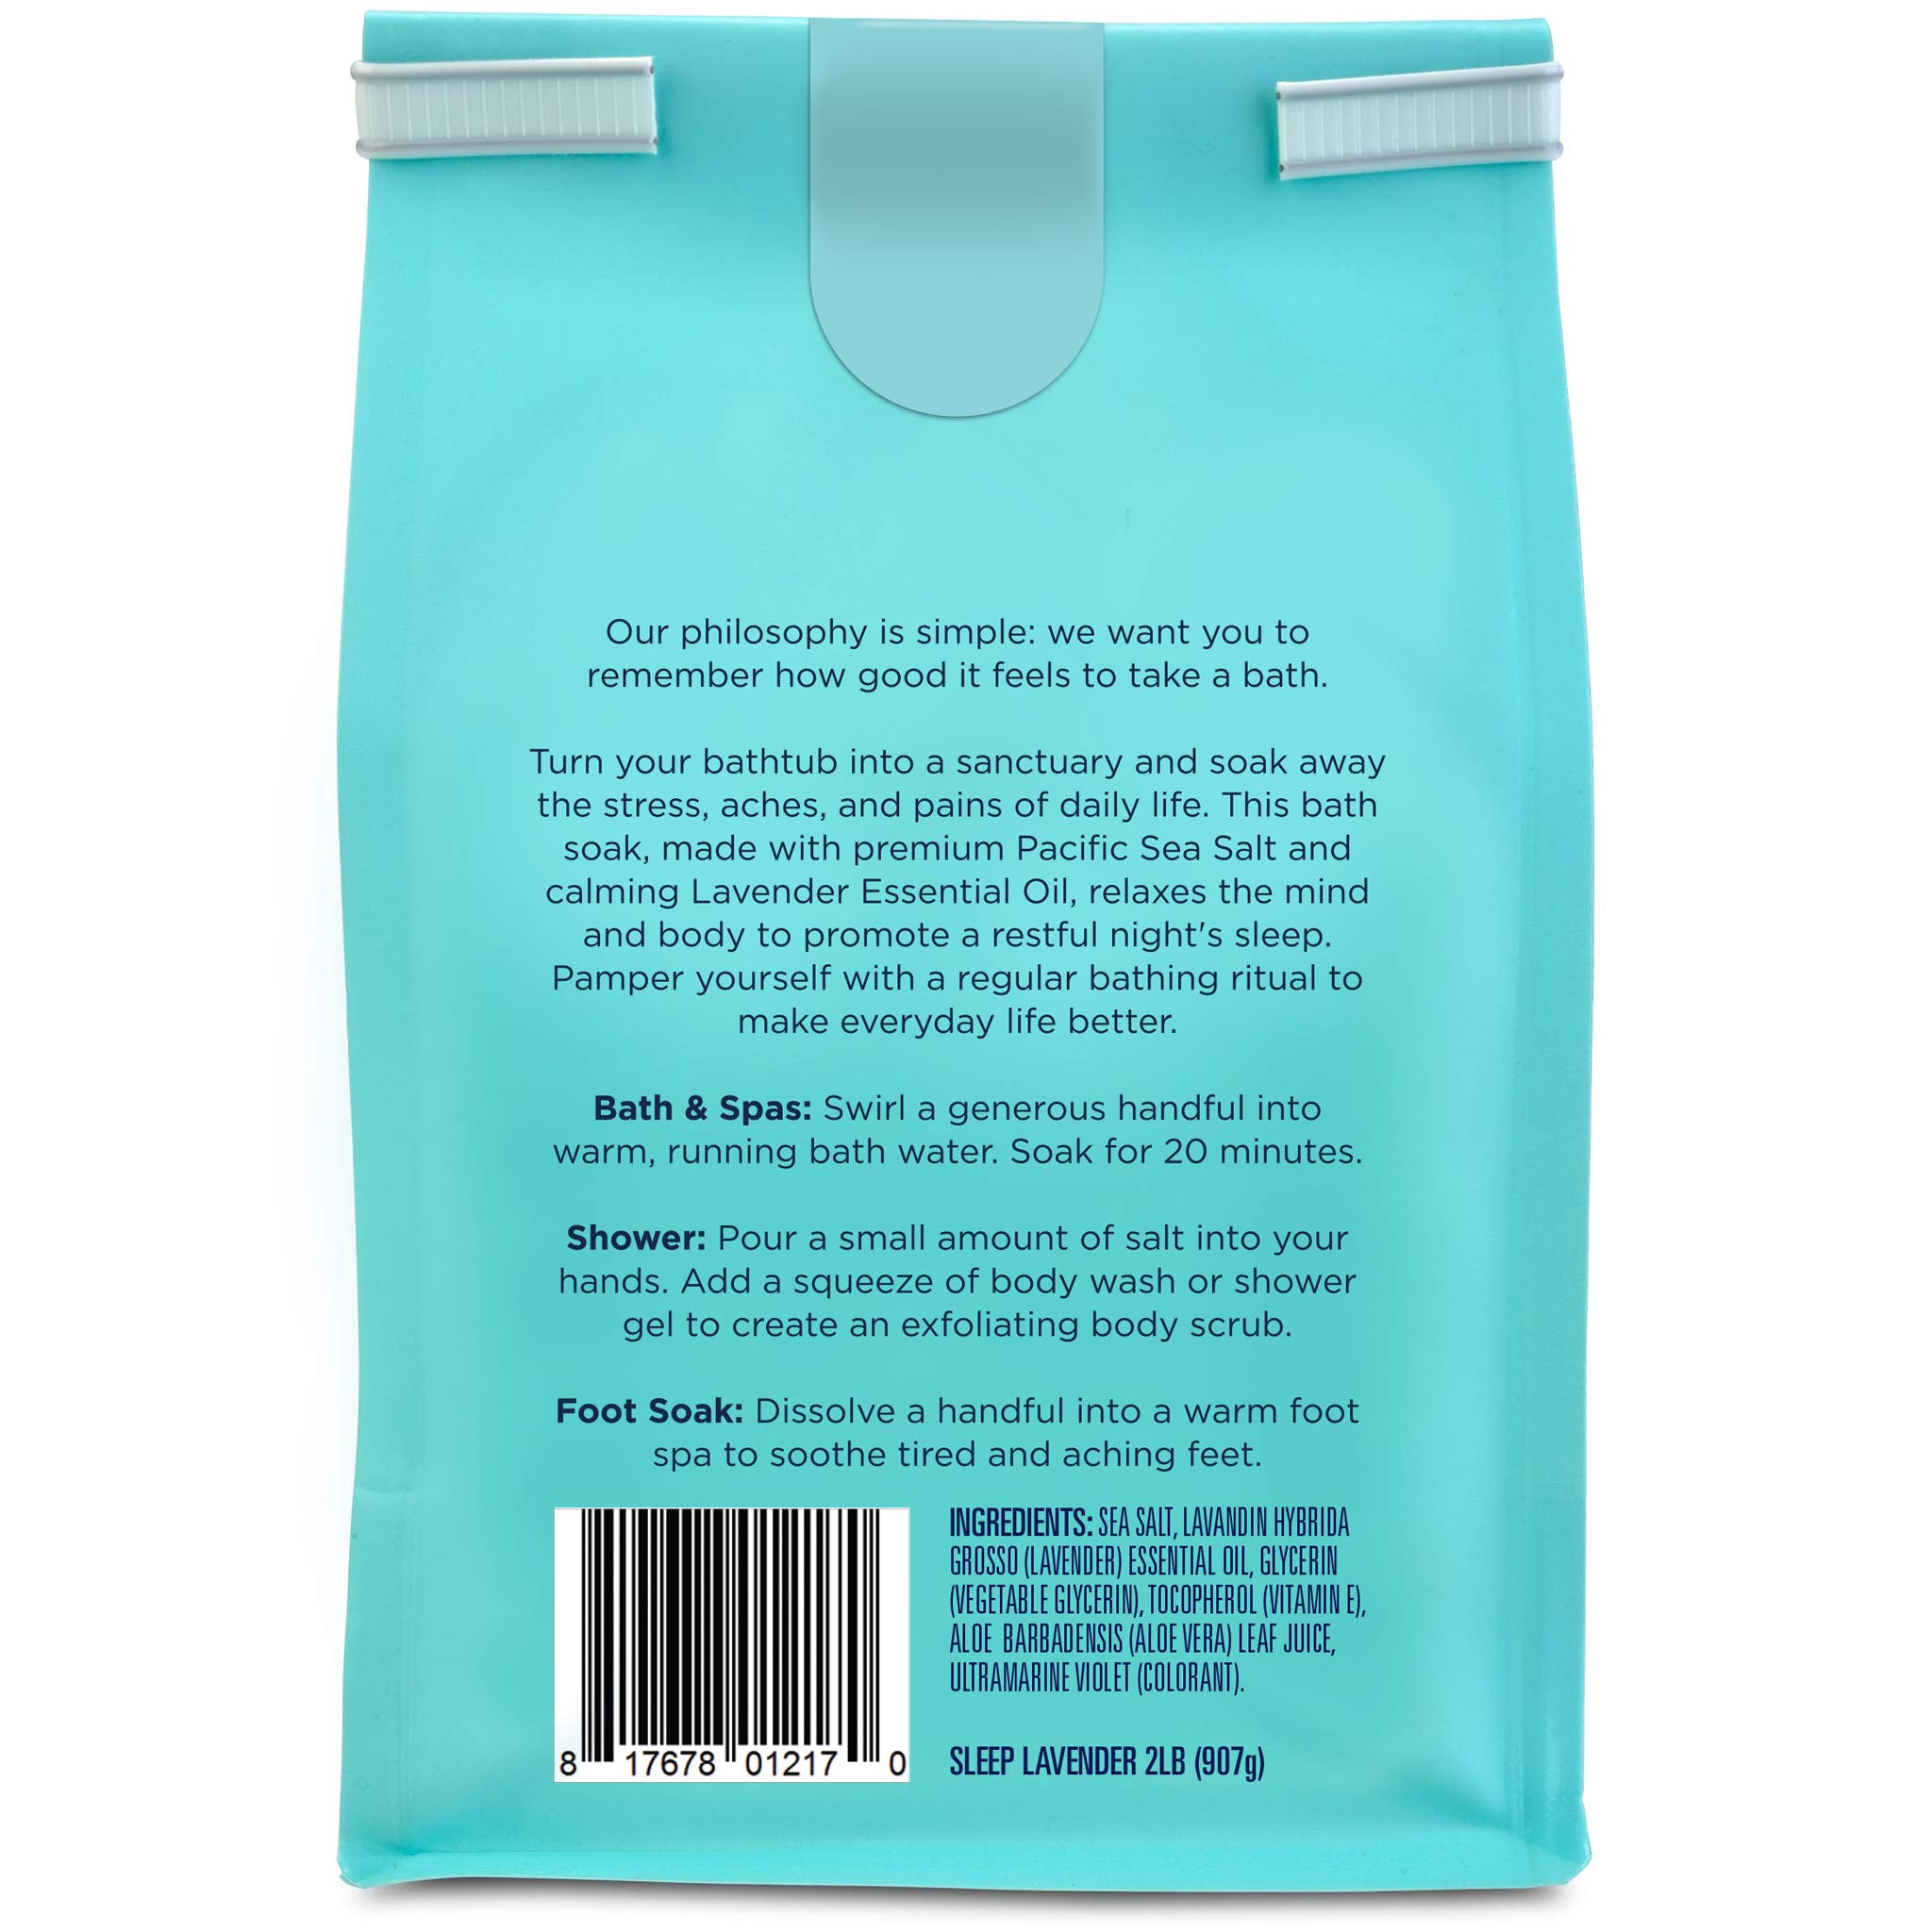 Sleep Lavender Bath Salts 2 lb. Luxury Gift Bag by San Francisco Salt Company